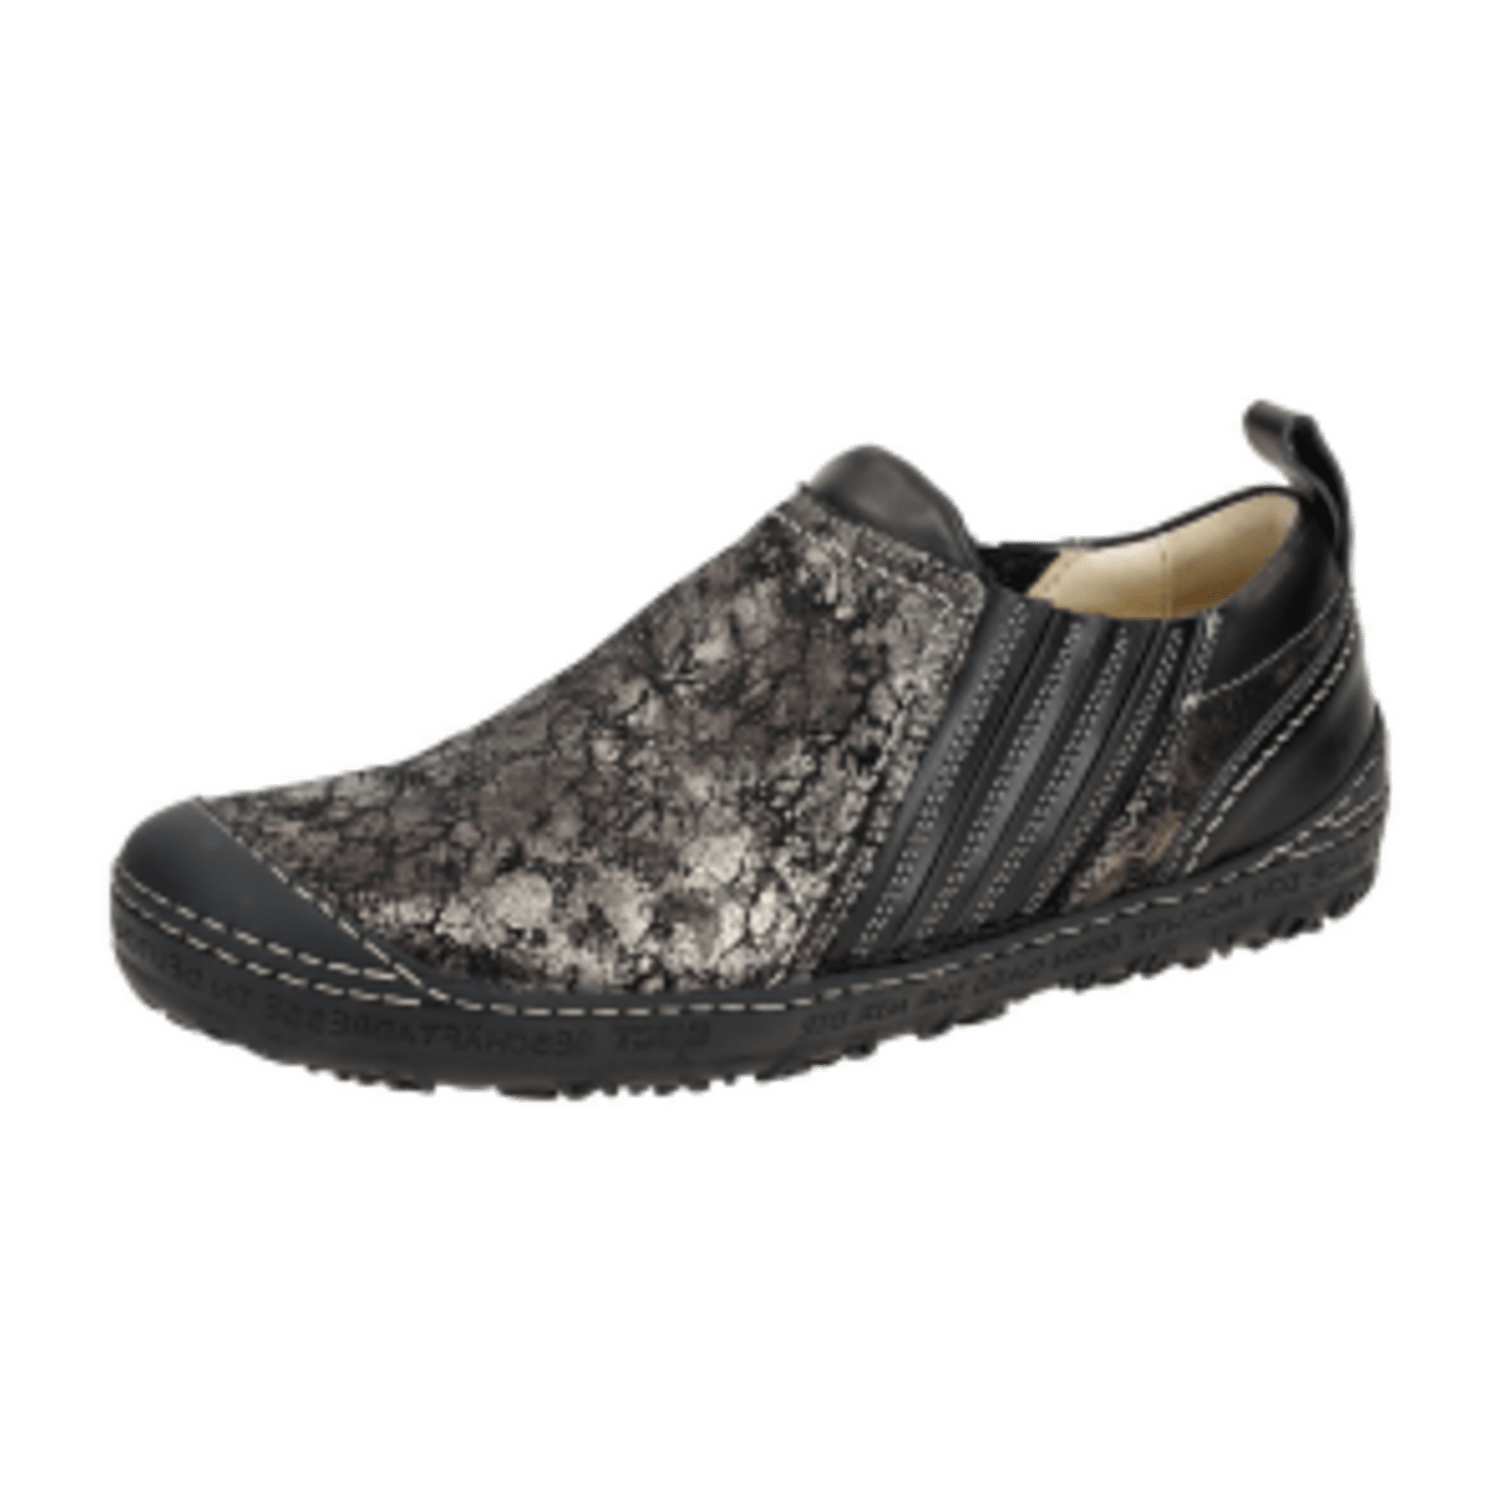 Eject Dass 2 Schuhe schwarz grau Damen Sneaker 21565